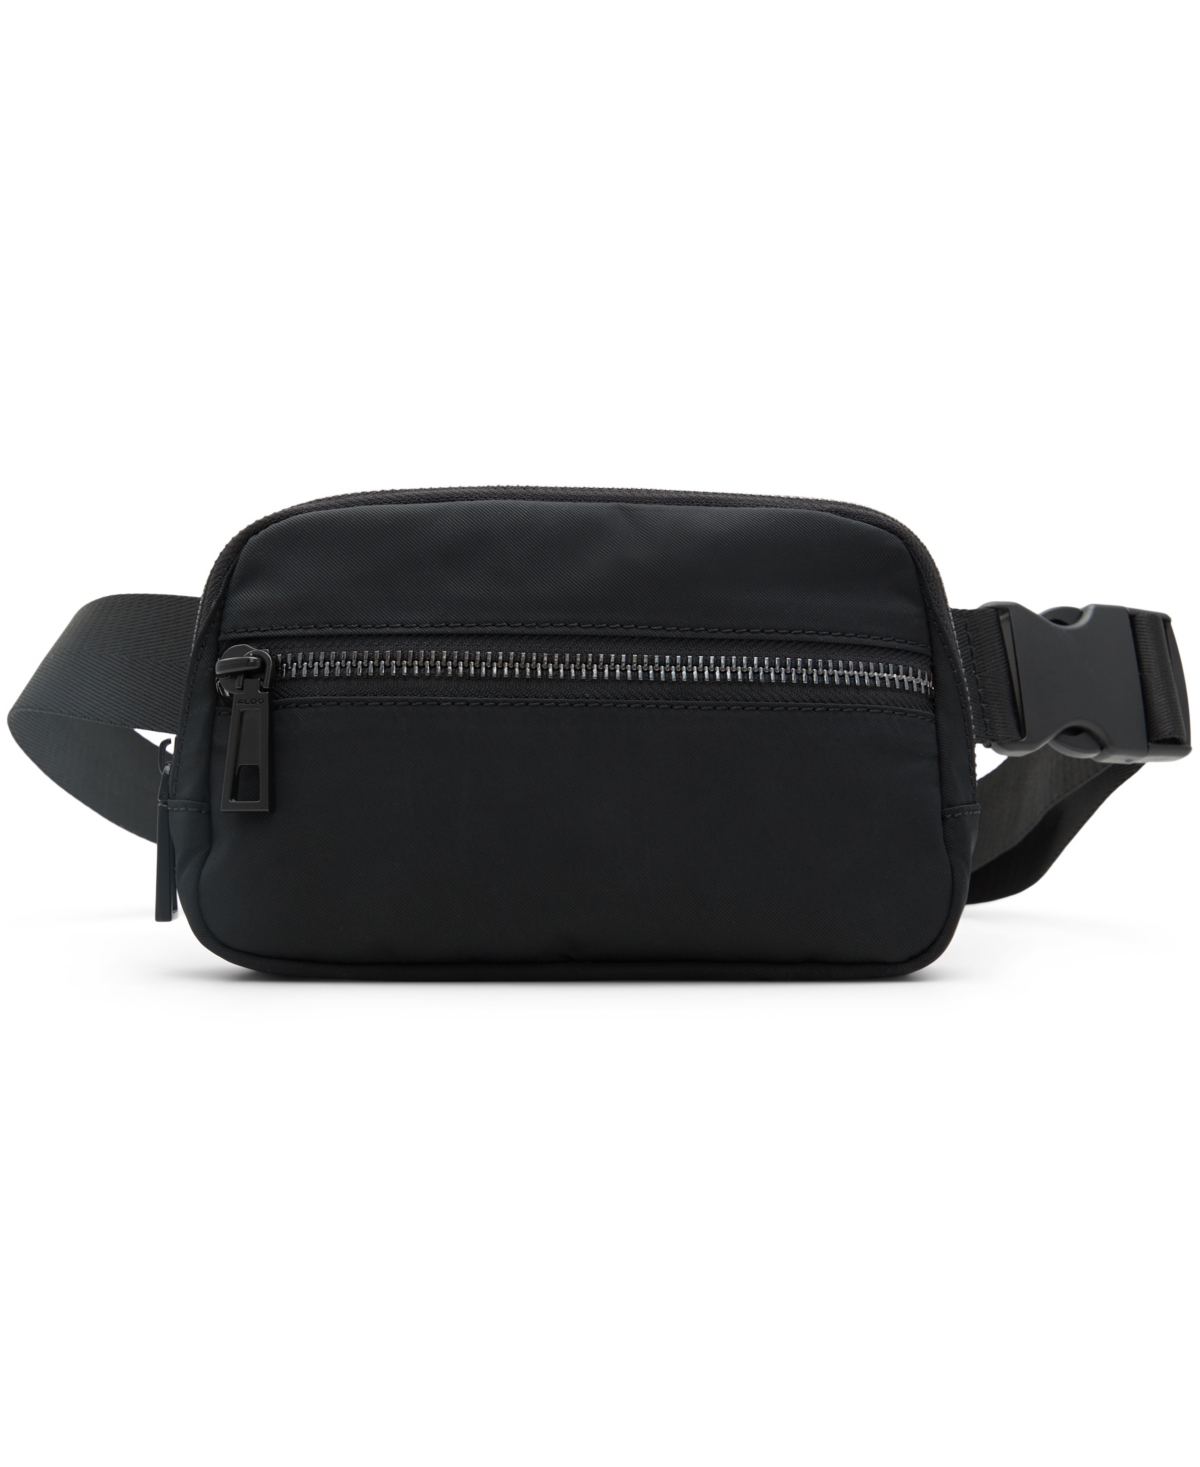 Alwaysonn Textile Belt Bag - Black, Black